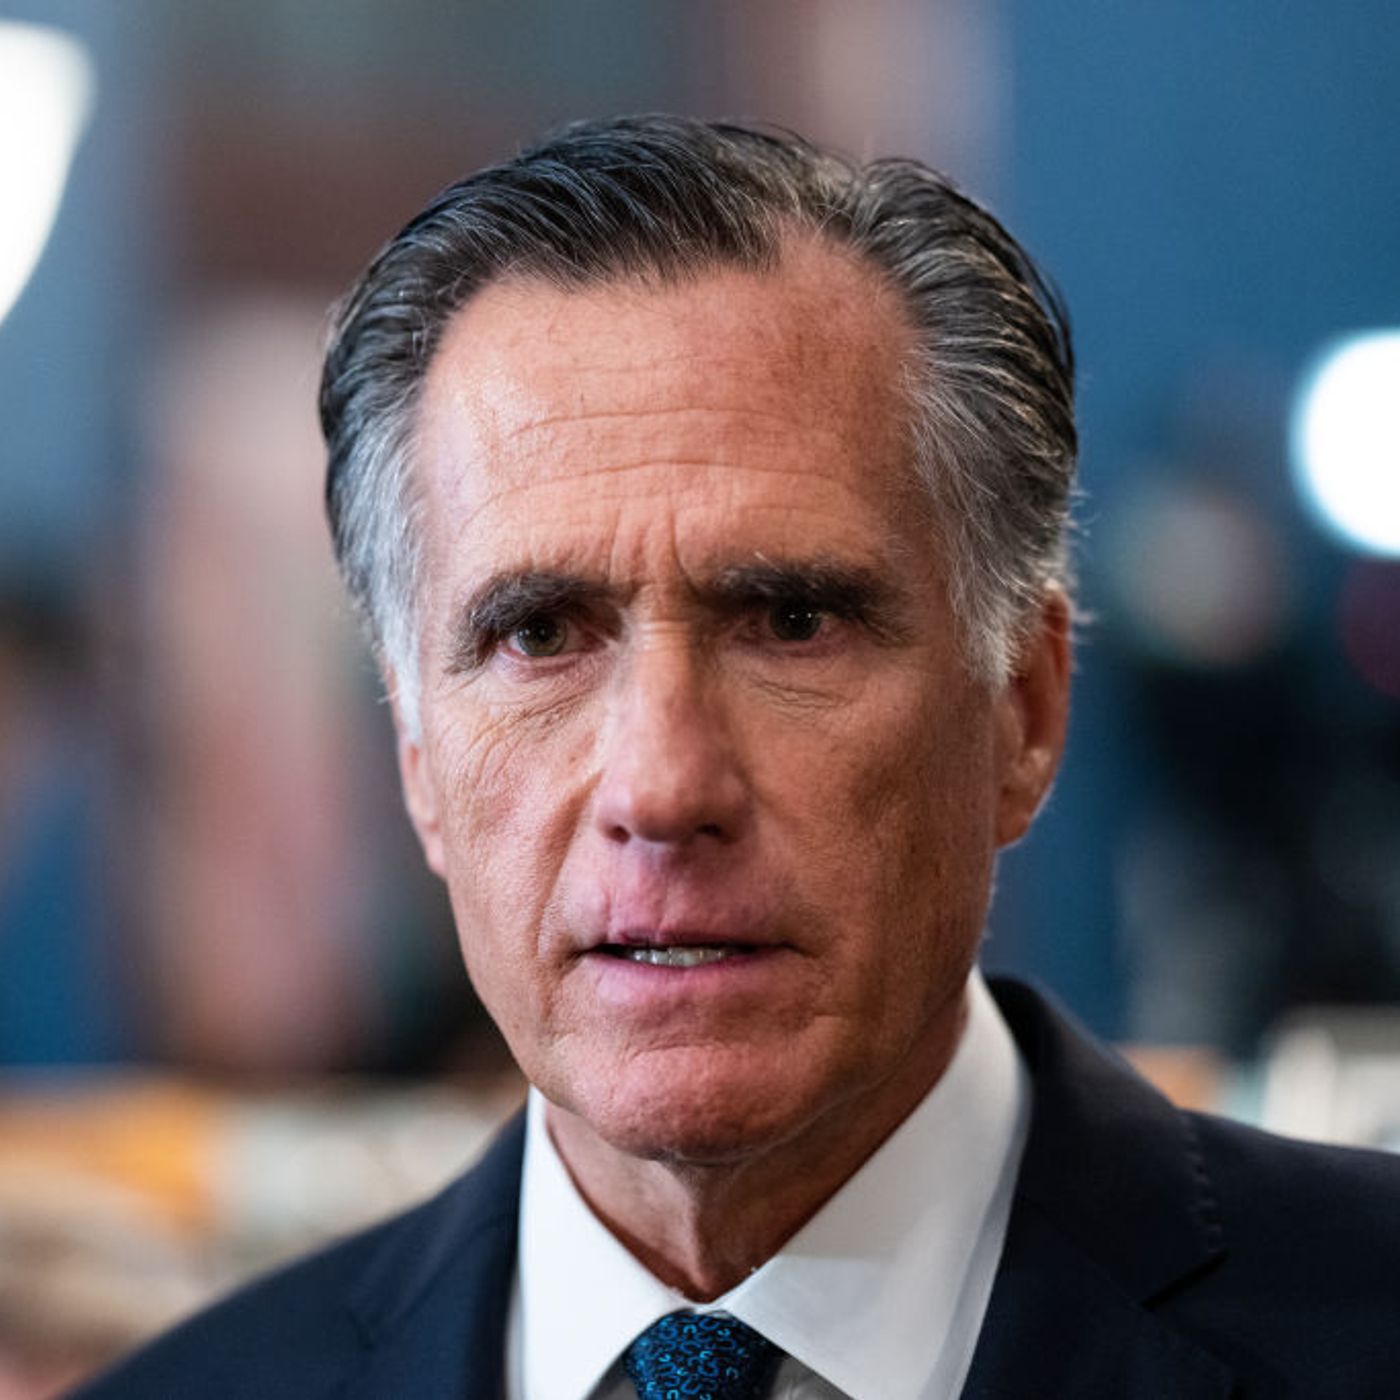 Americano: Have we seen the last of Mitt Romney?